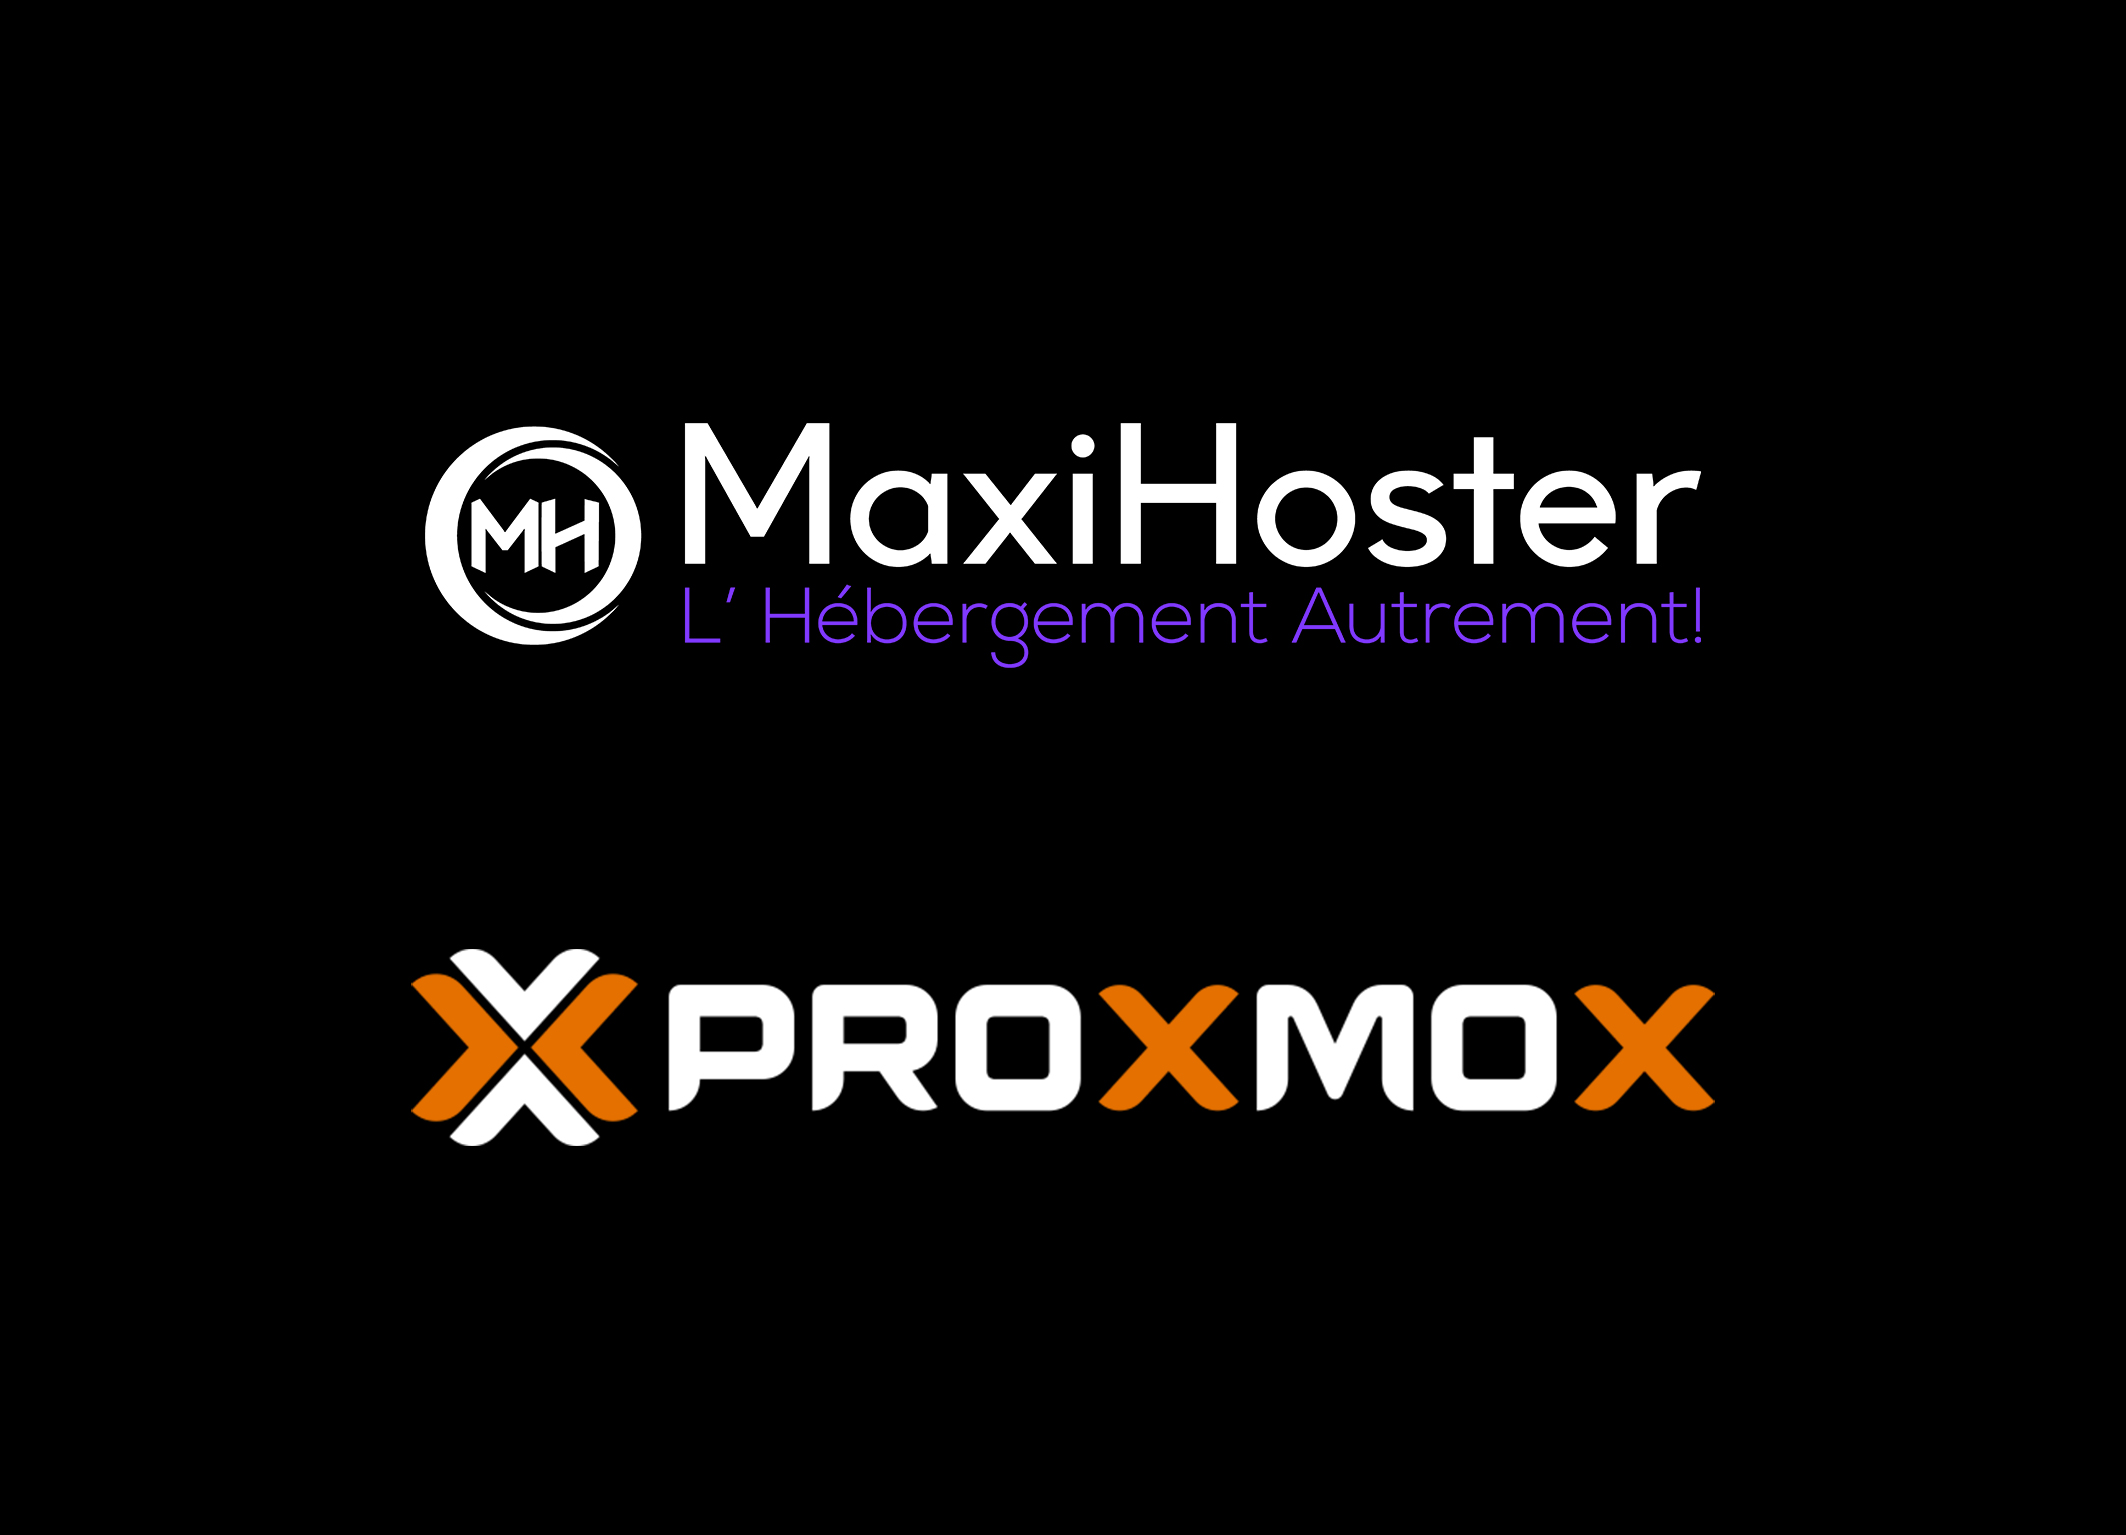 ProxMox MaxiHoster